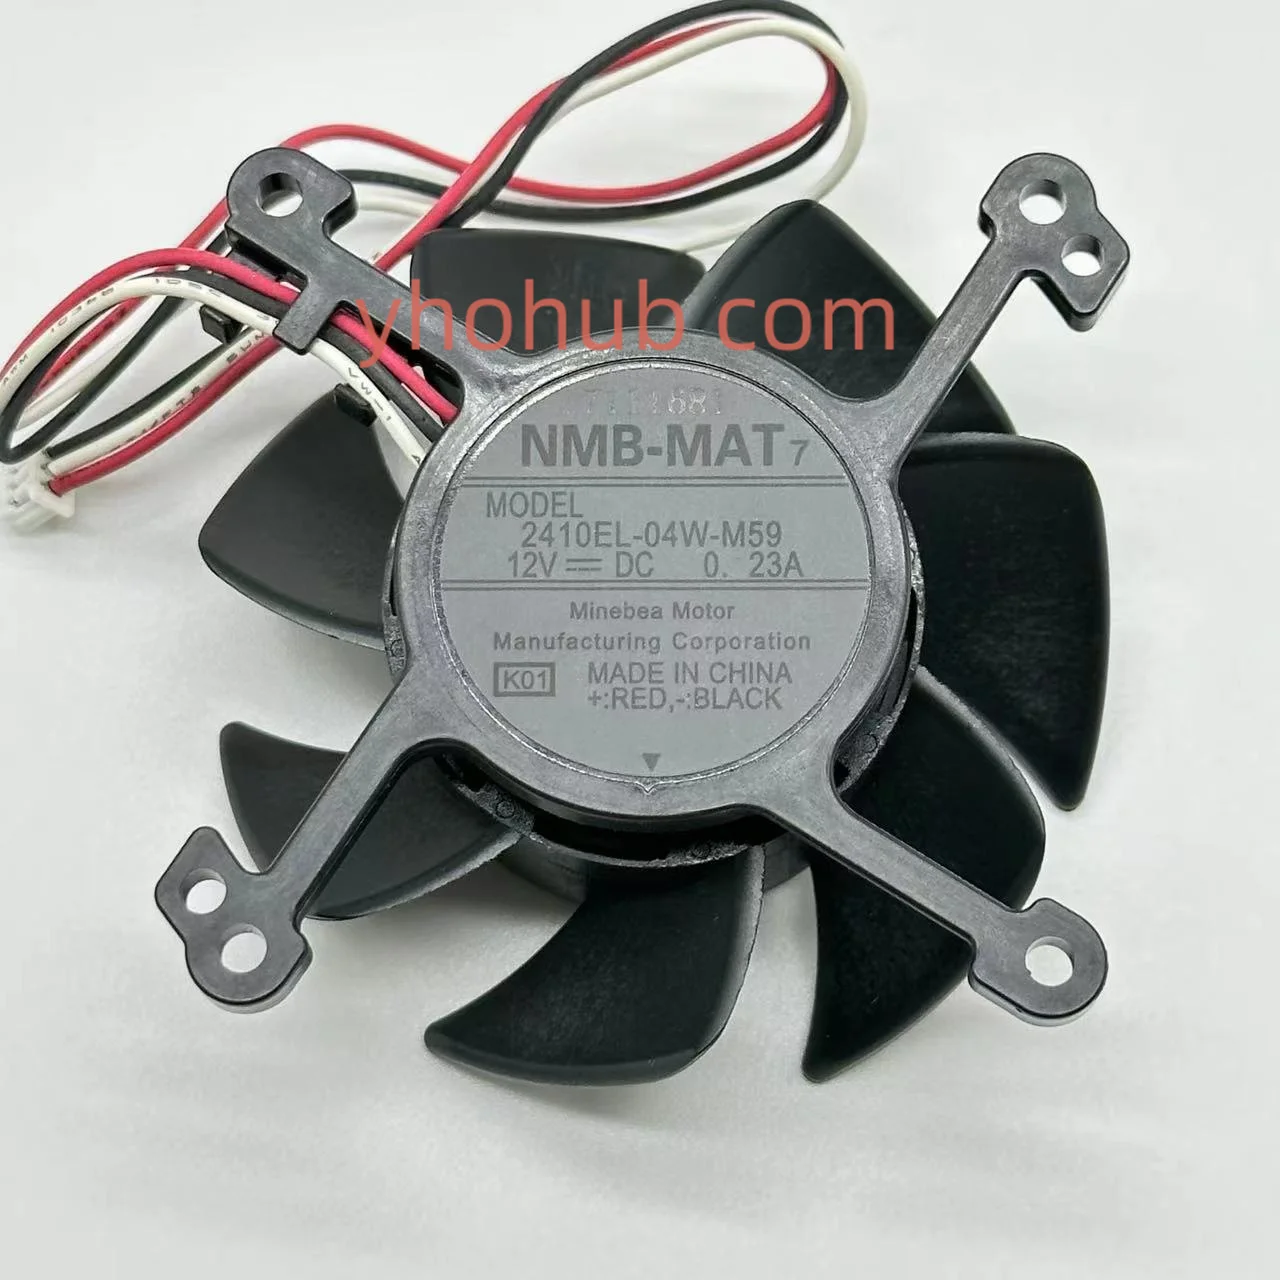 

NMB-MAT 2410EL-04W-M59 K01 Server Cooling Fan DC 12V 0.23A 3-Wire